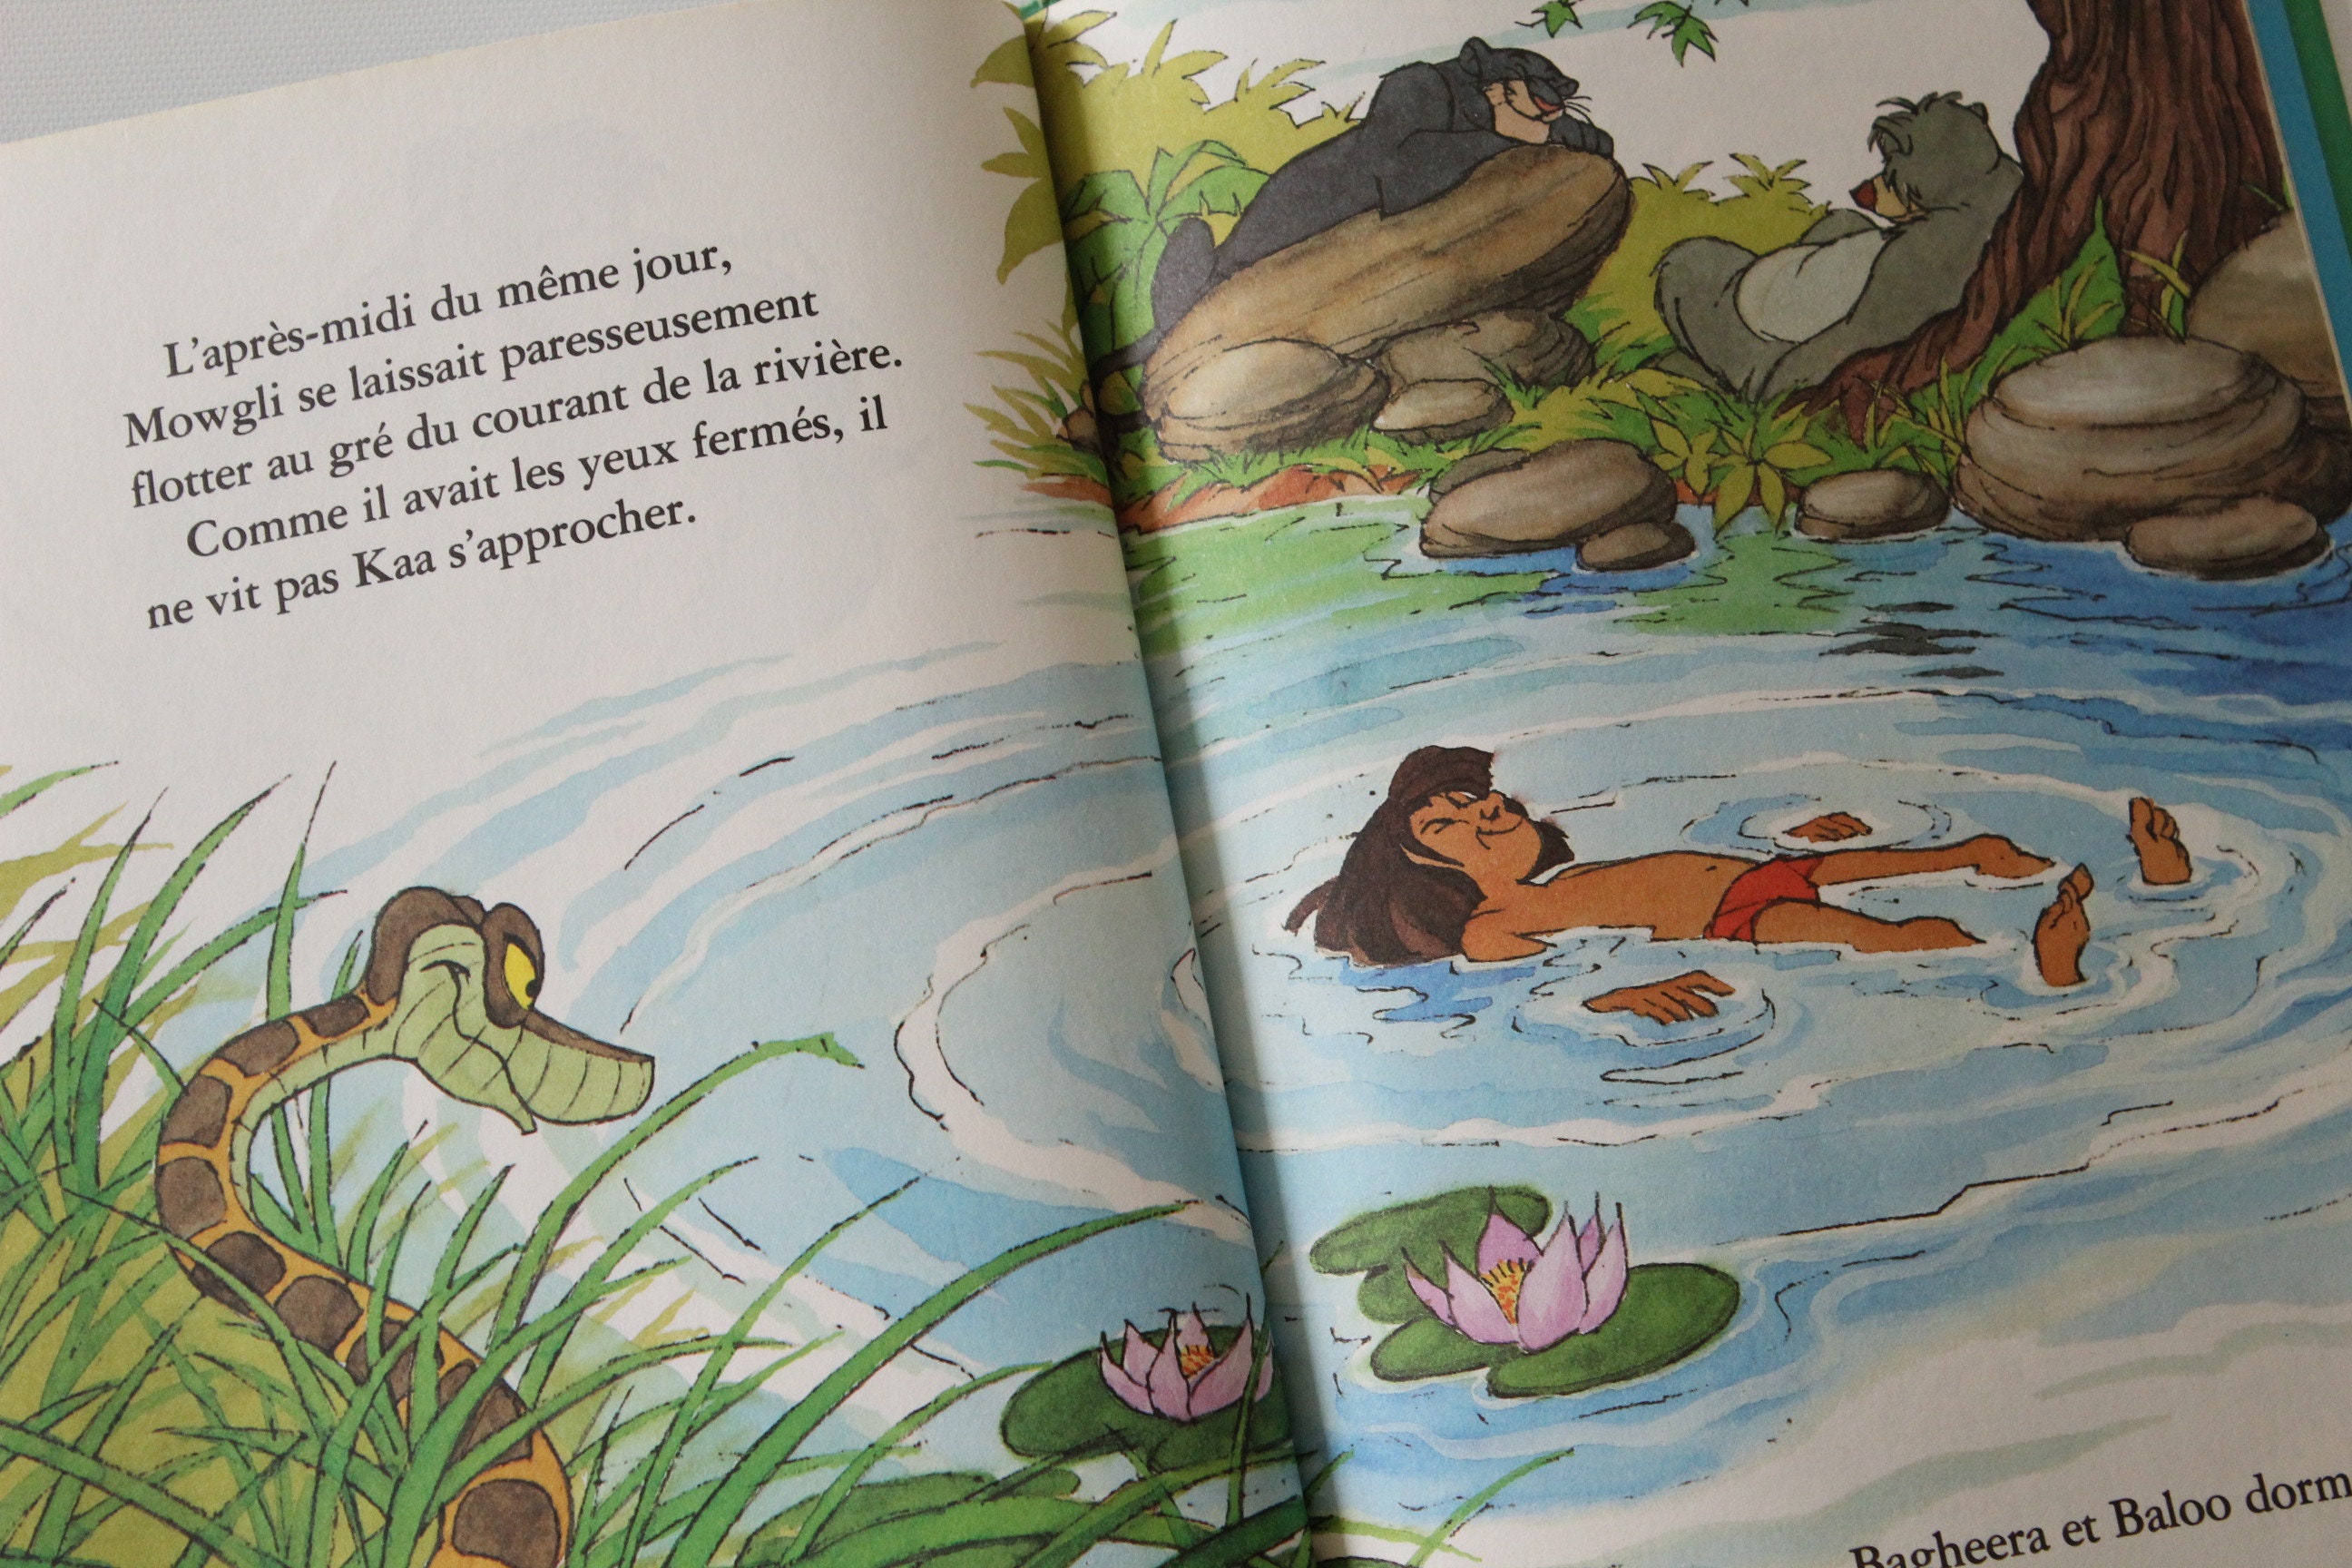 Le livre de la jungle - Walt Disney - France Loisirs 1979 [Etat